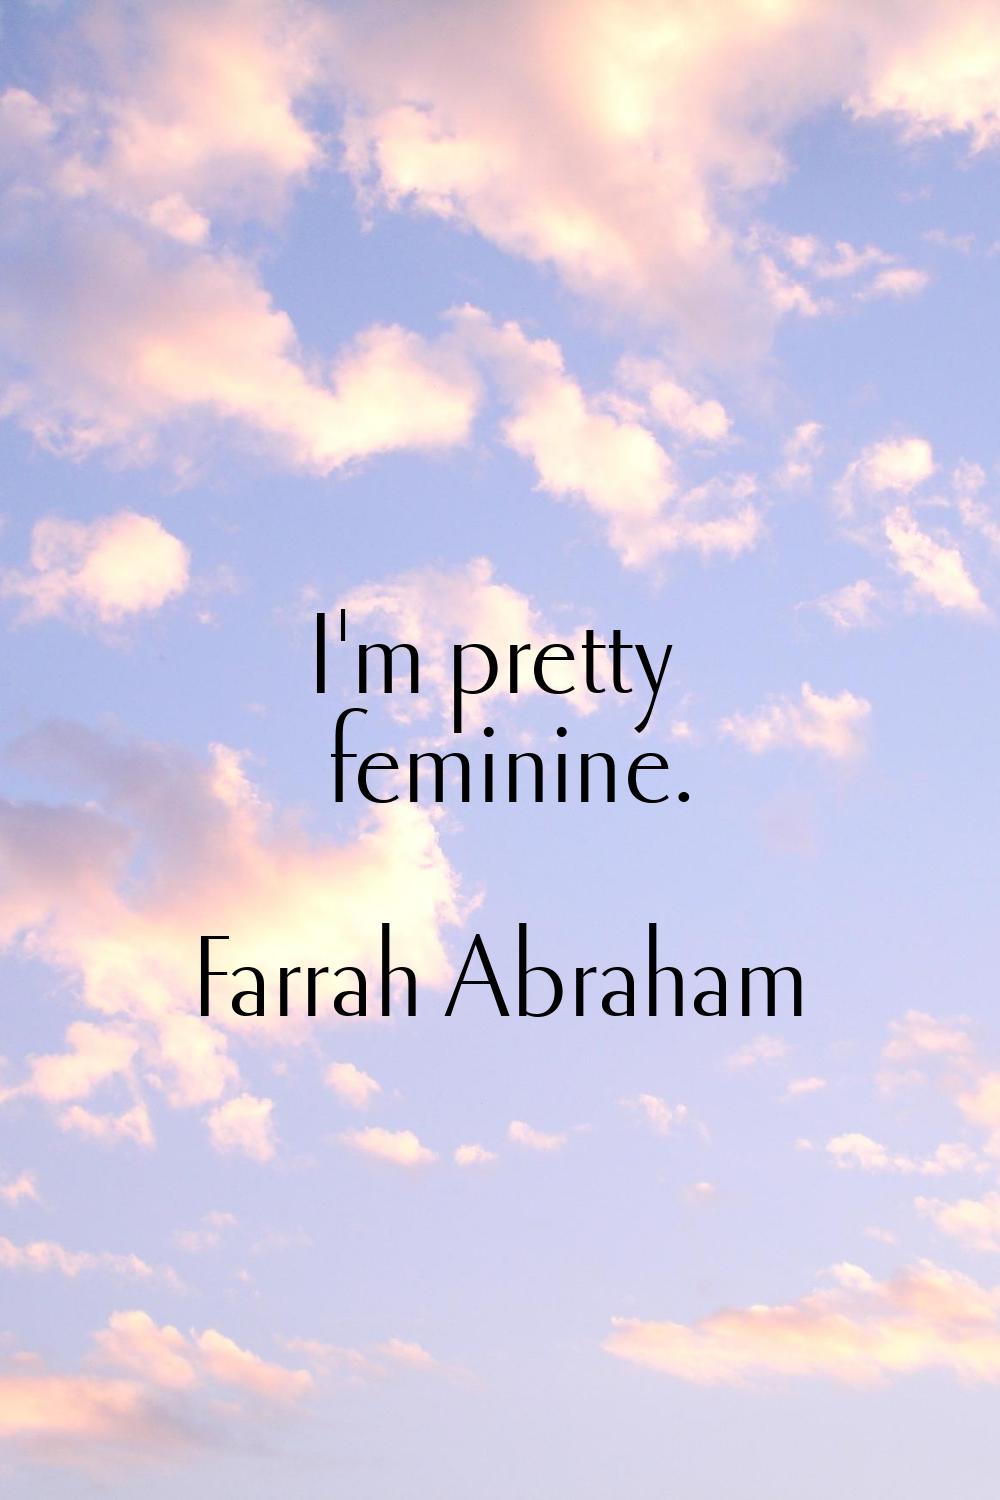 I'm pretty feminine.